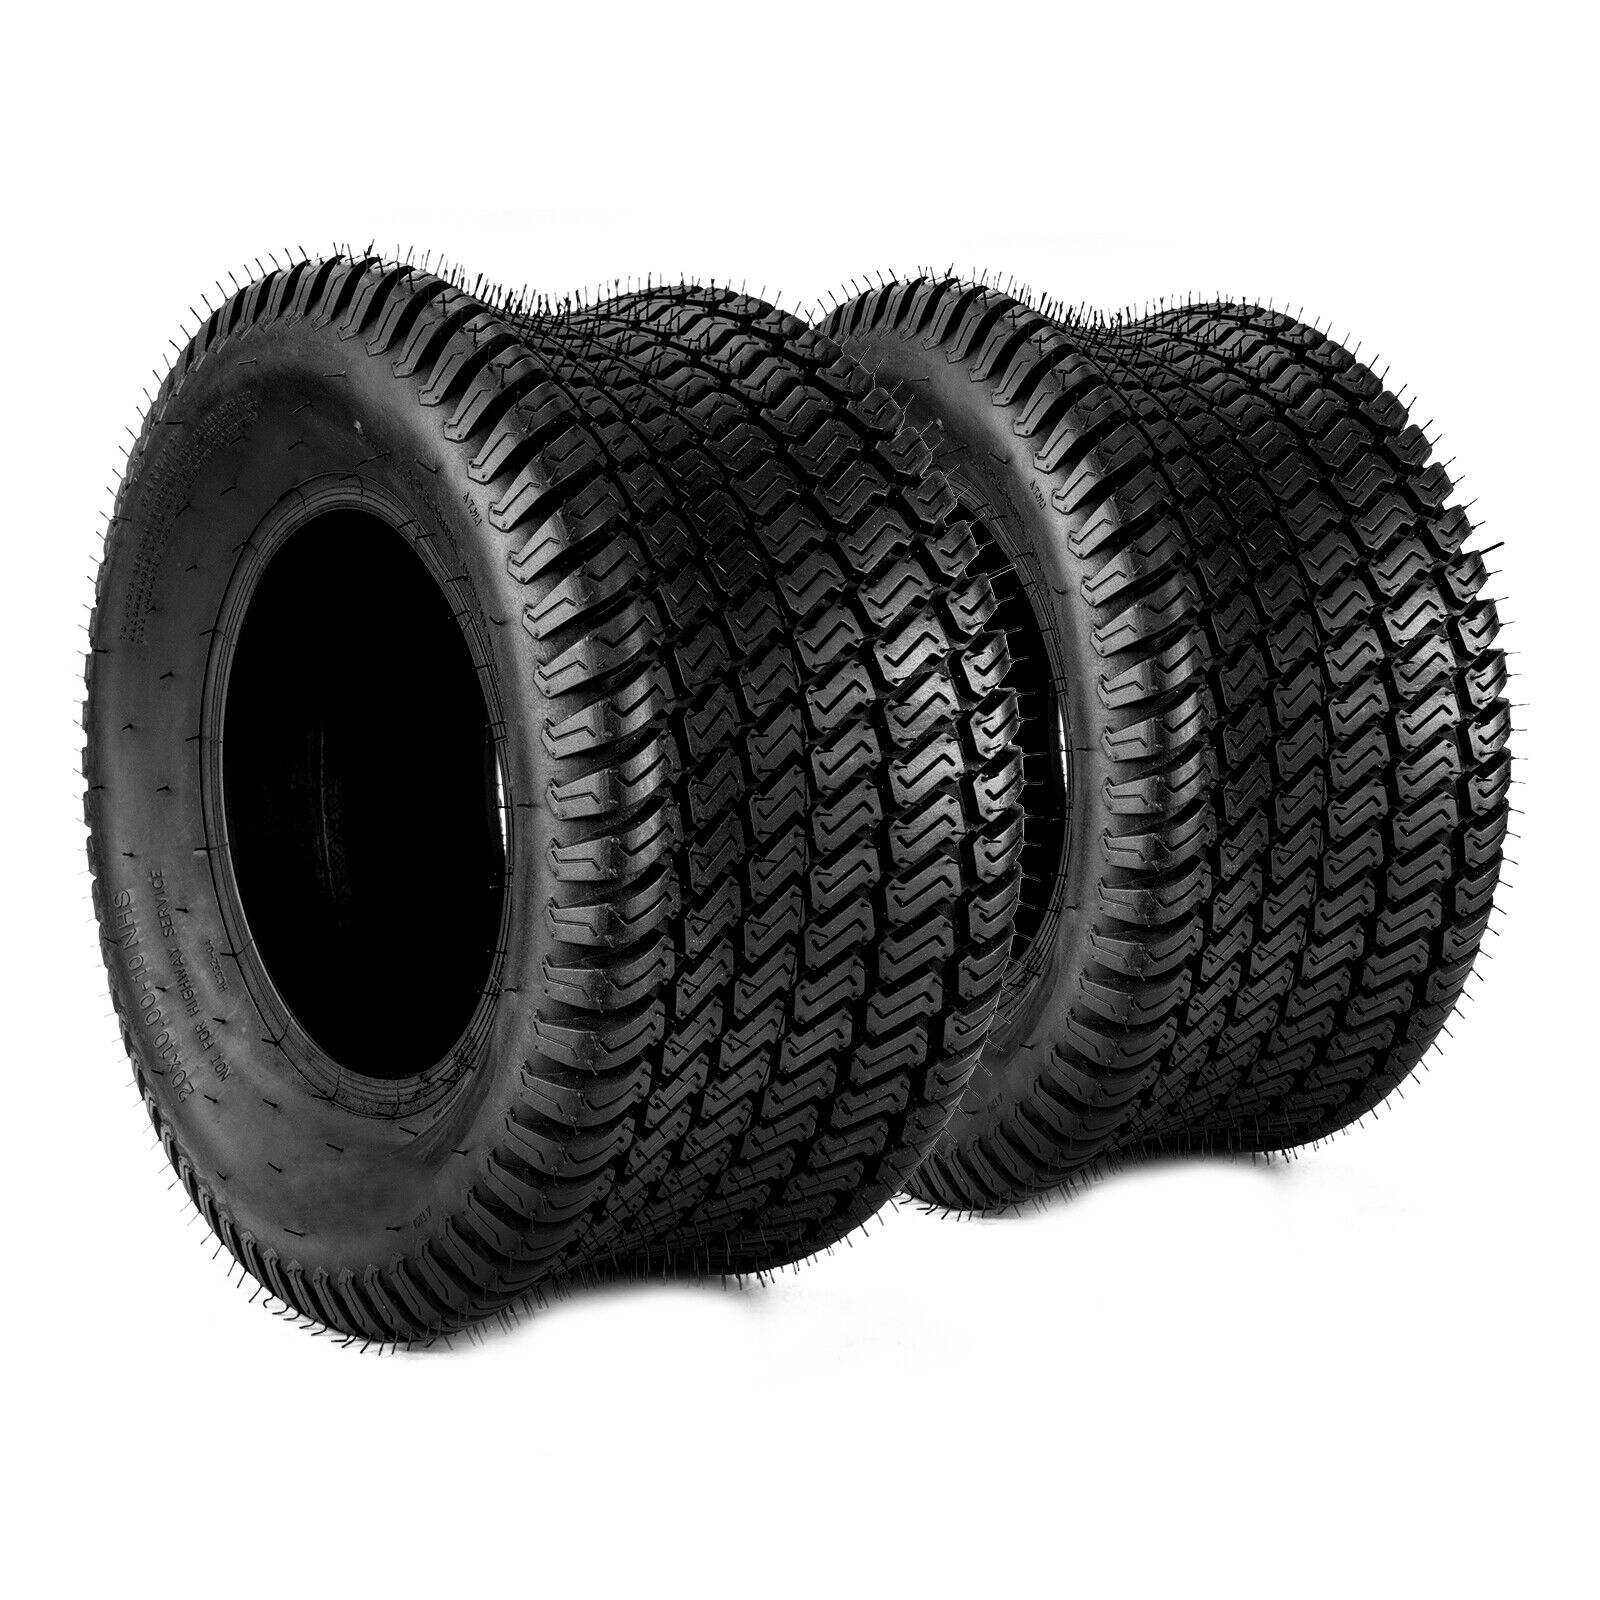 2 X 20x10-10 Tires 20x10x10 20*10-10 Pattern Heavy Duty 4PR ATV Tyres